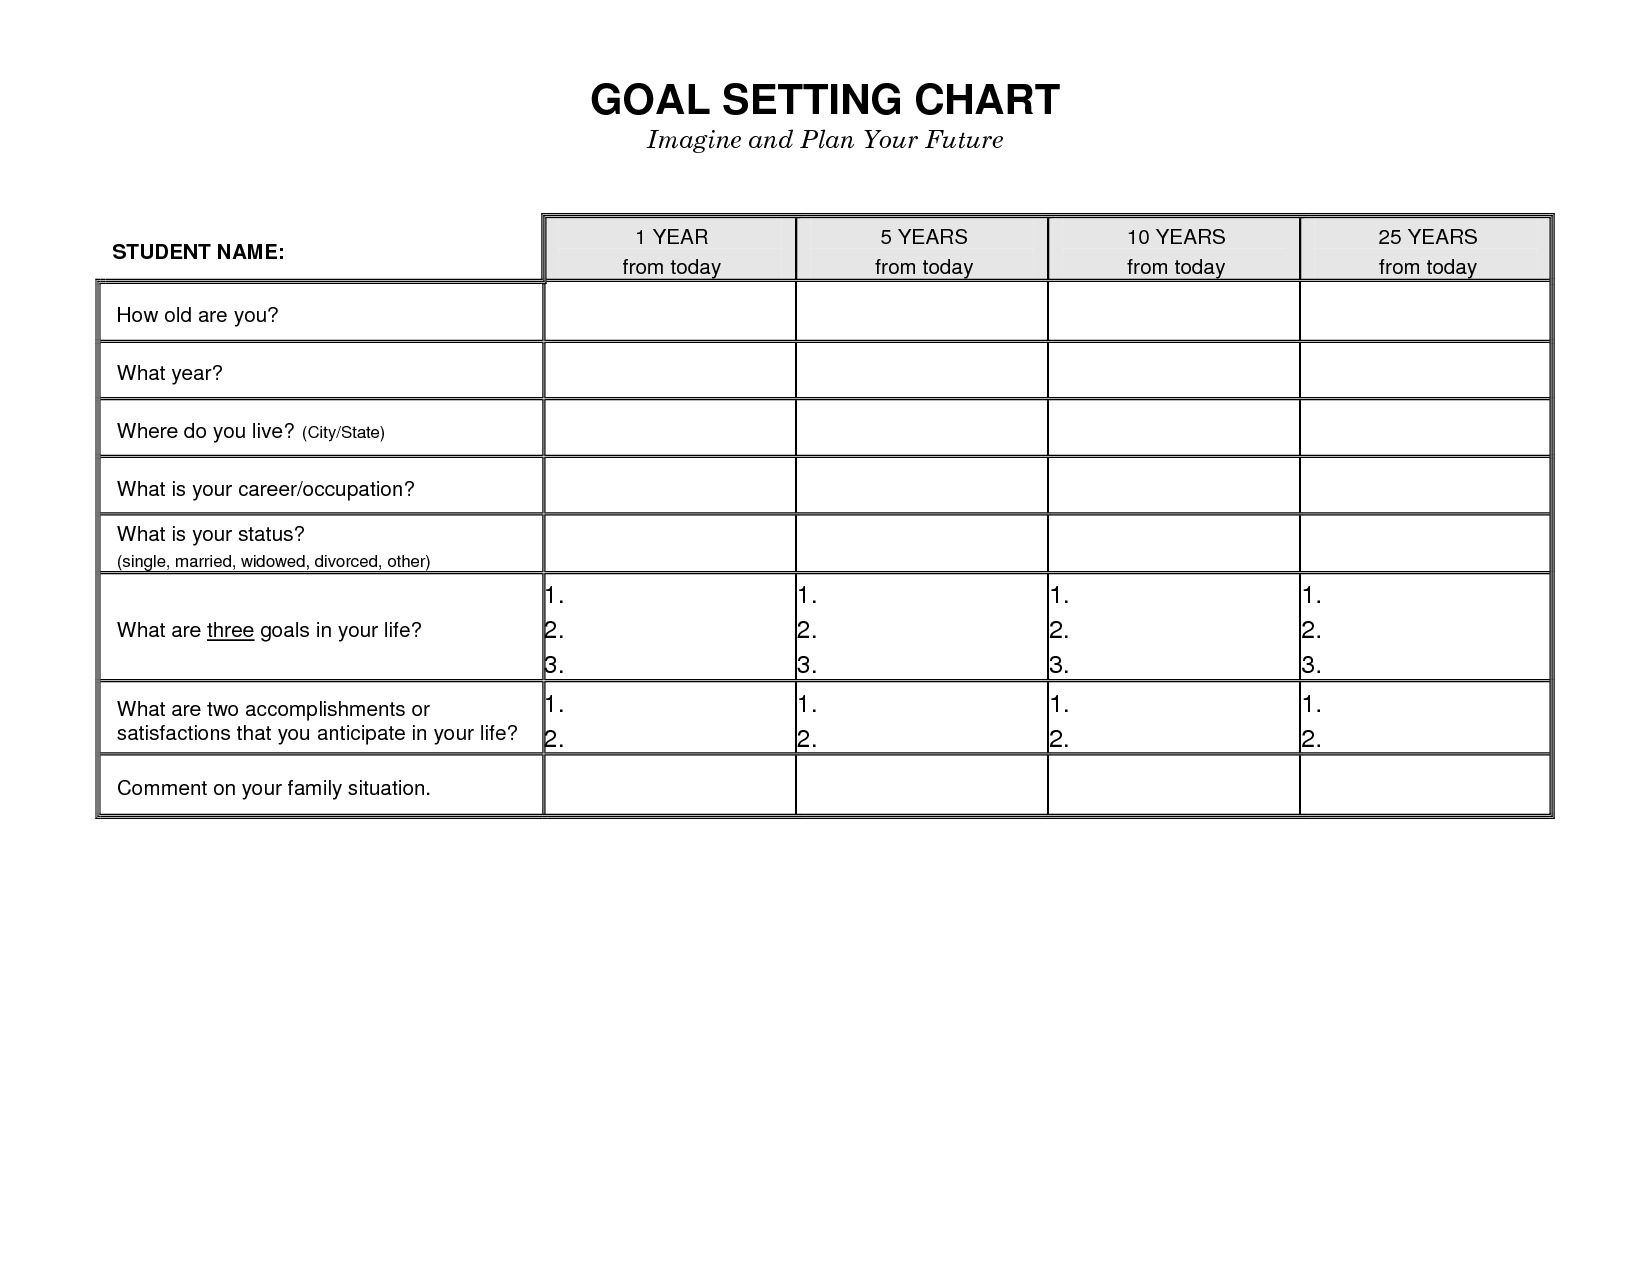 Goal Setting Chart Template Image